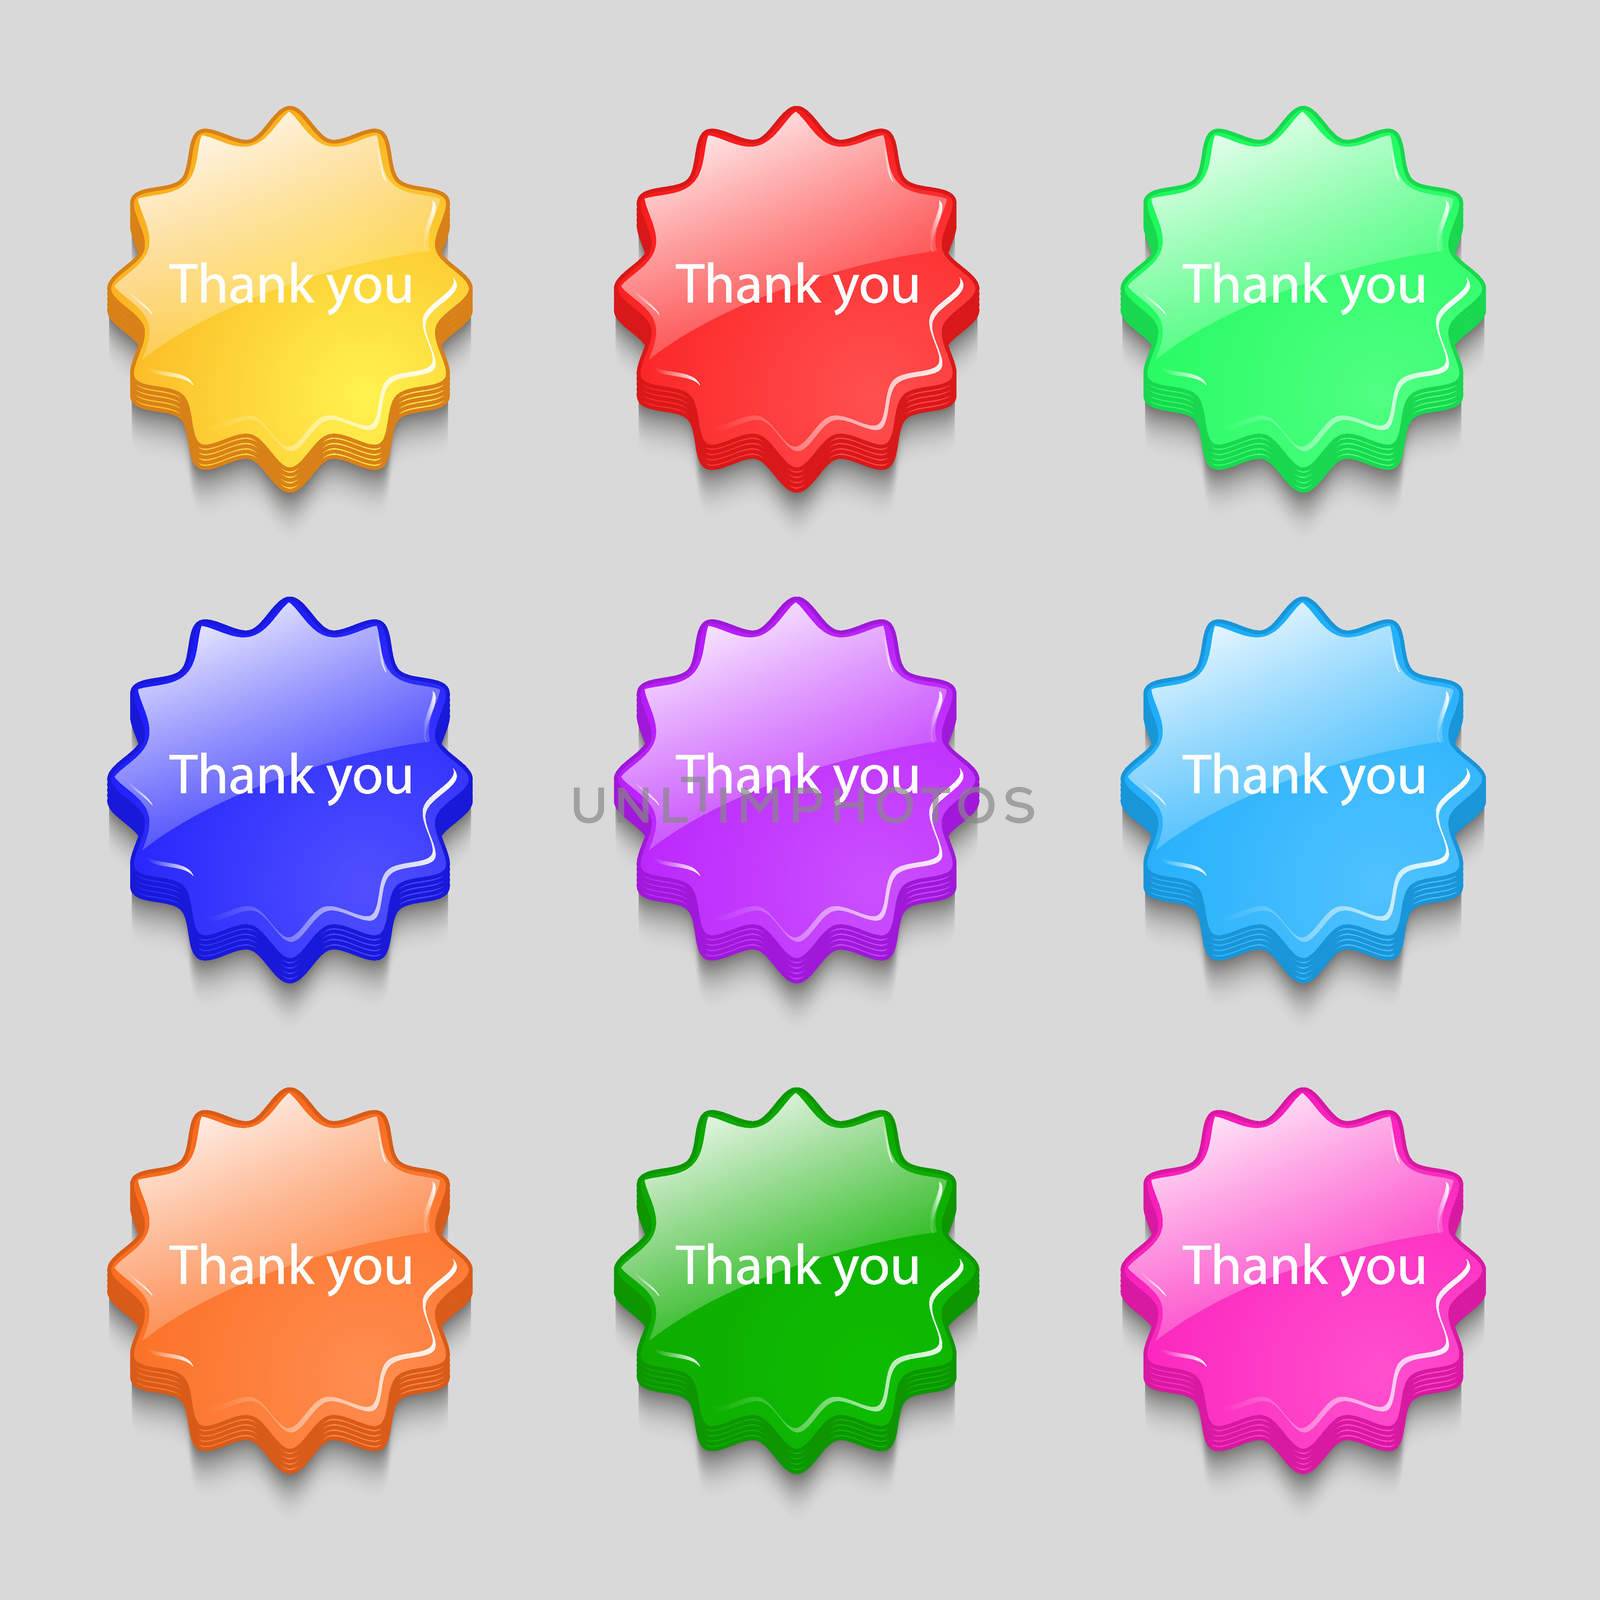 Thank you sign icon. Gratitude symbol. Symbols on nine wavy colourful buttons.  by serhii_lohvyniuk